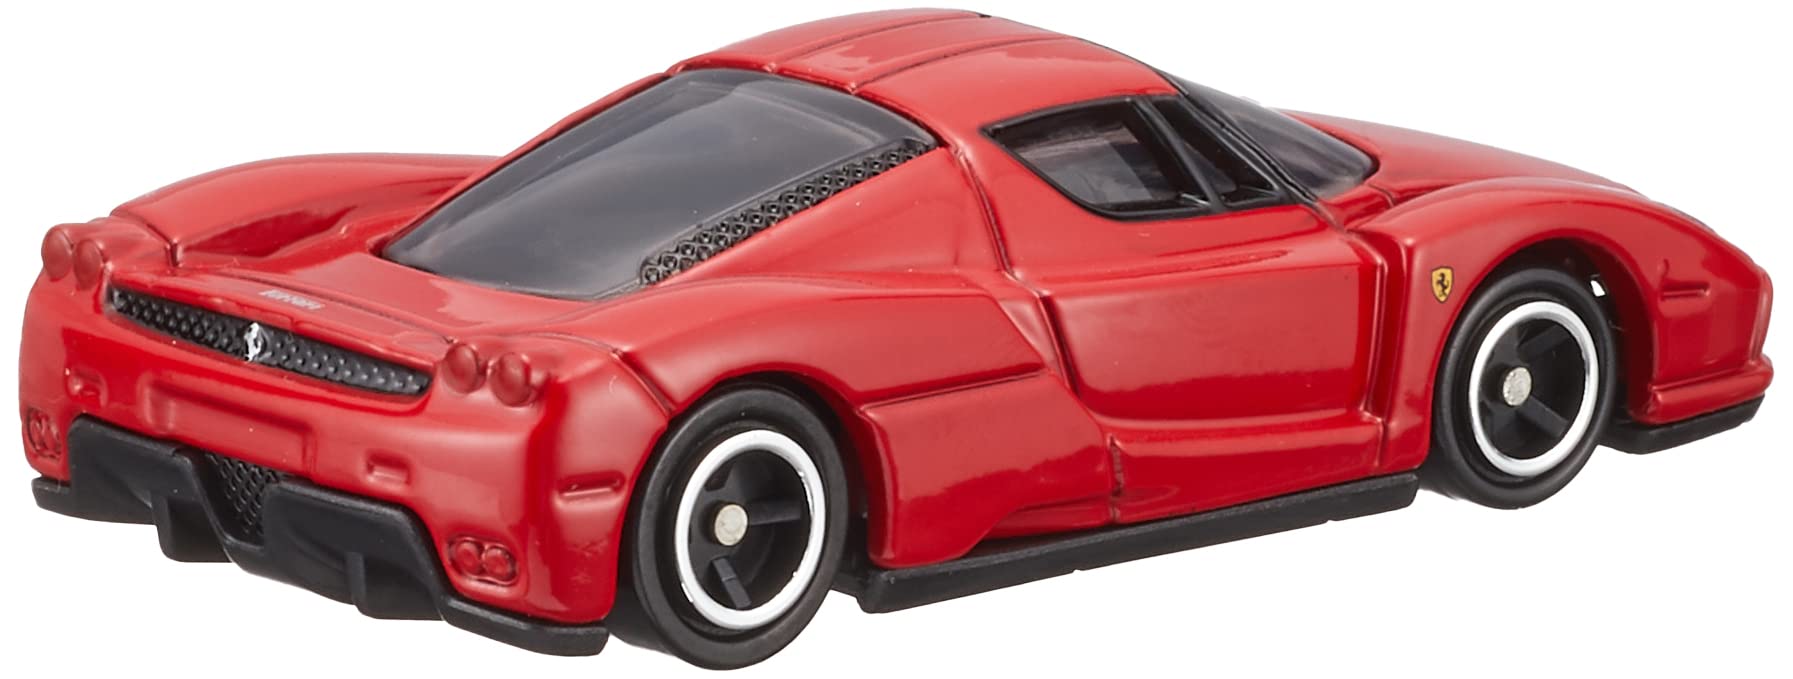 Takara Tomy No.11 Enzo Ferrari Tomica Mini Car Toy Ideal for Kids Age 3+